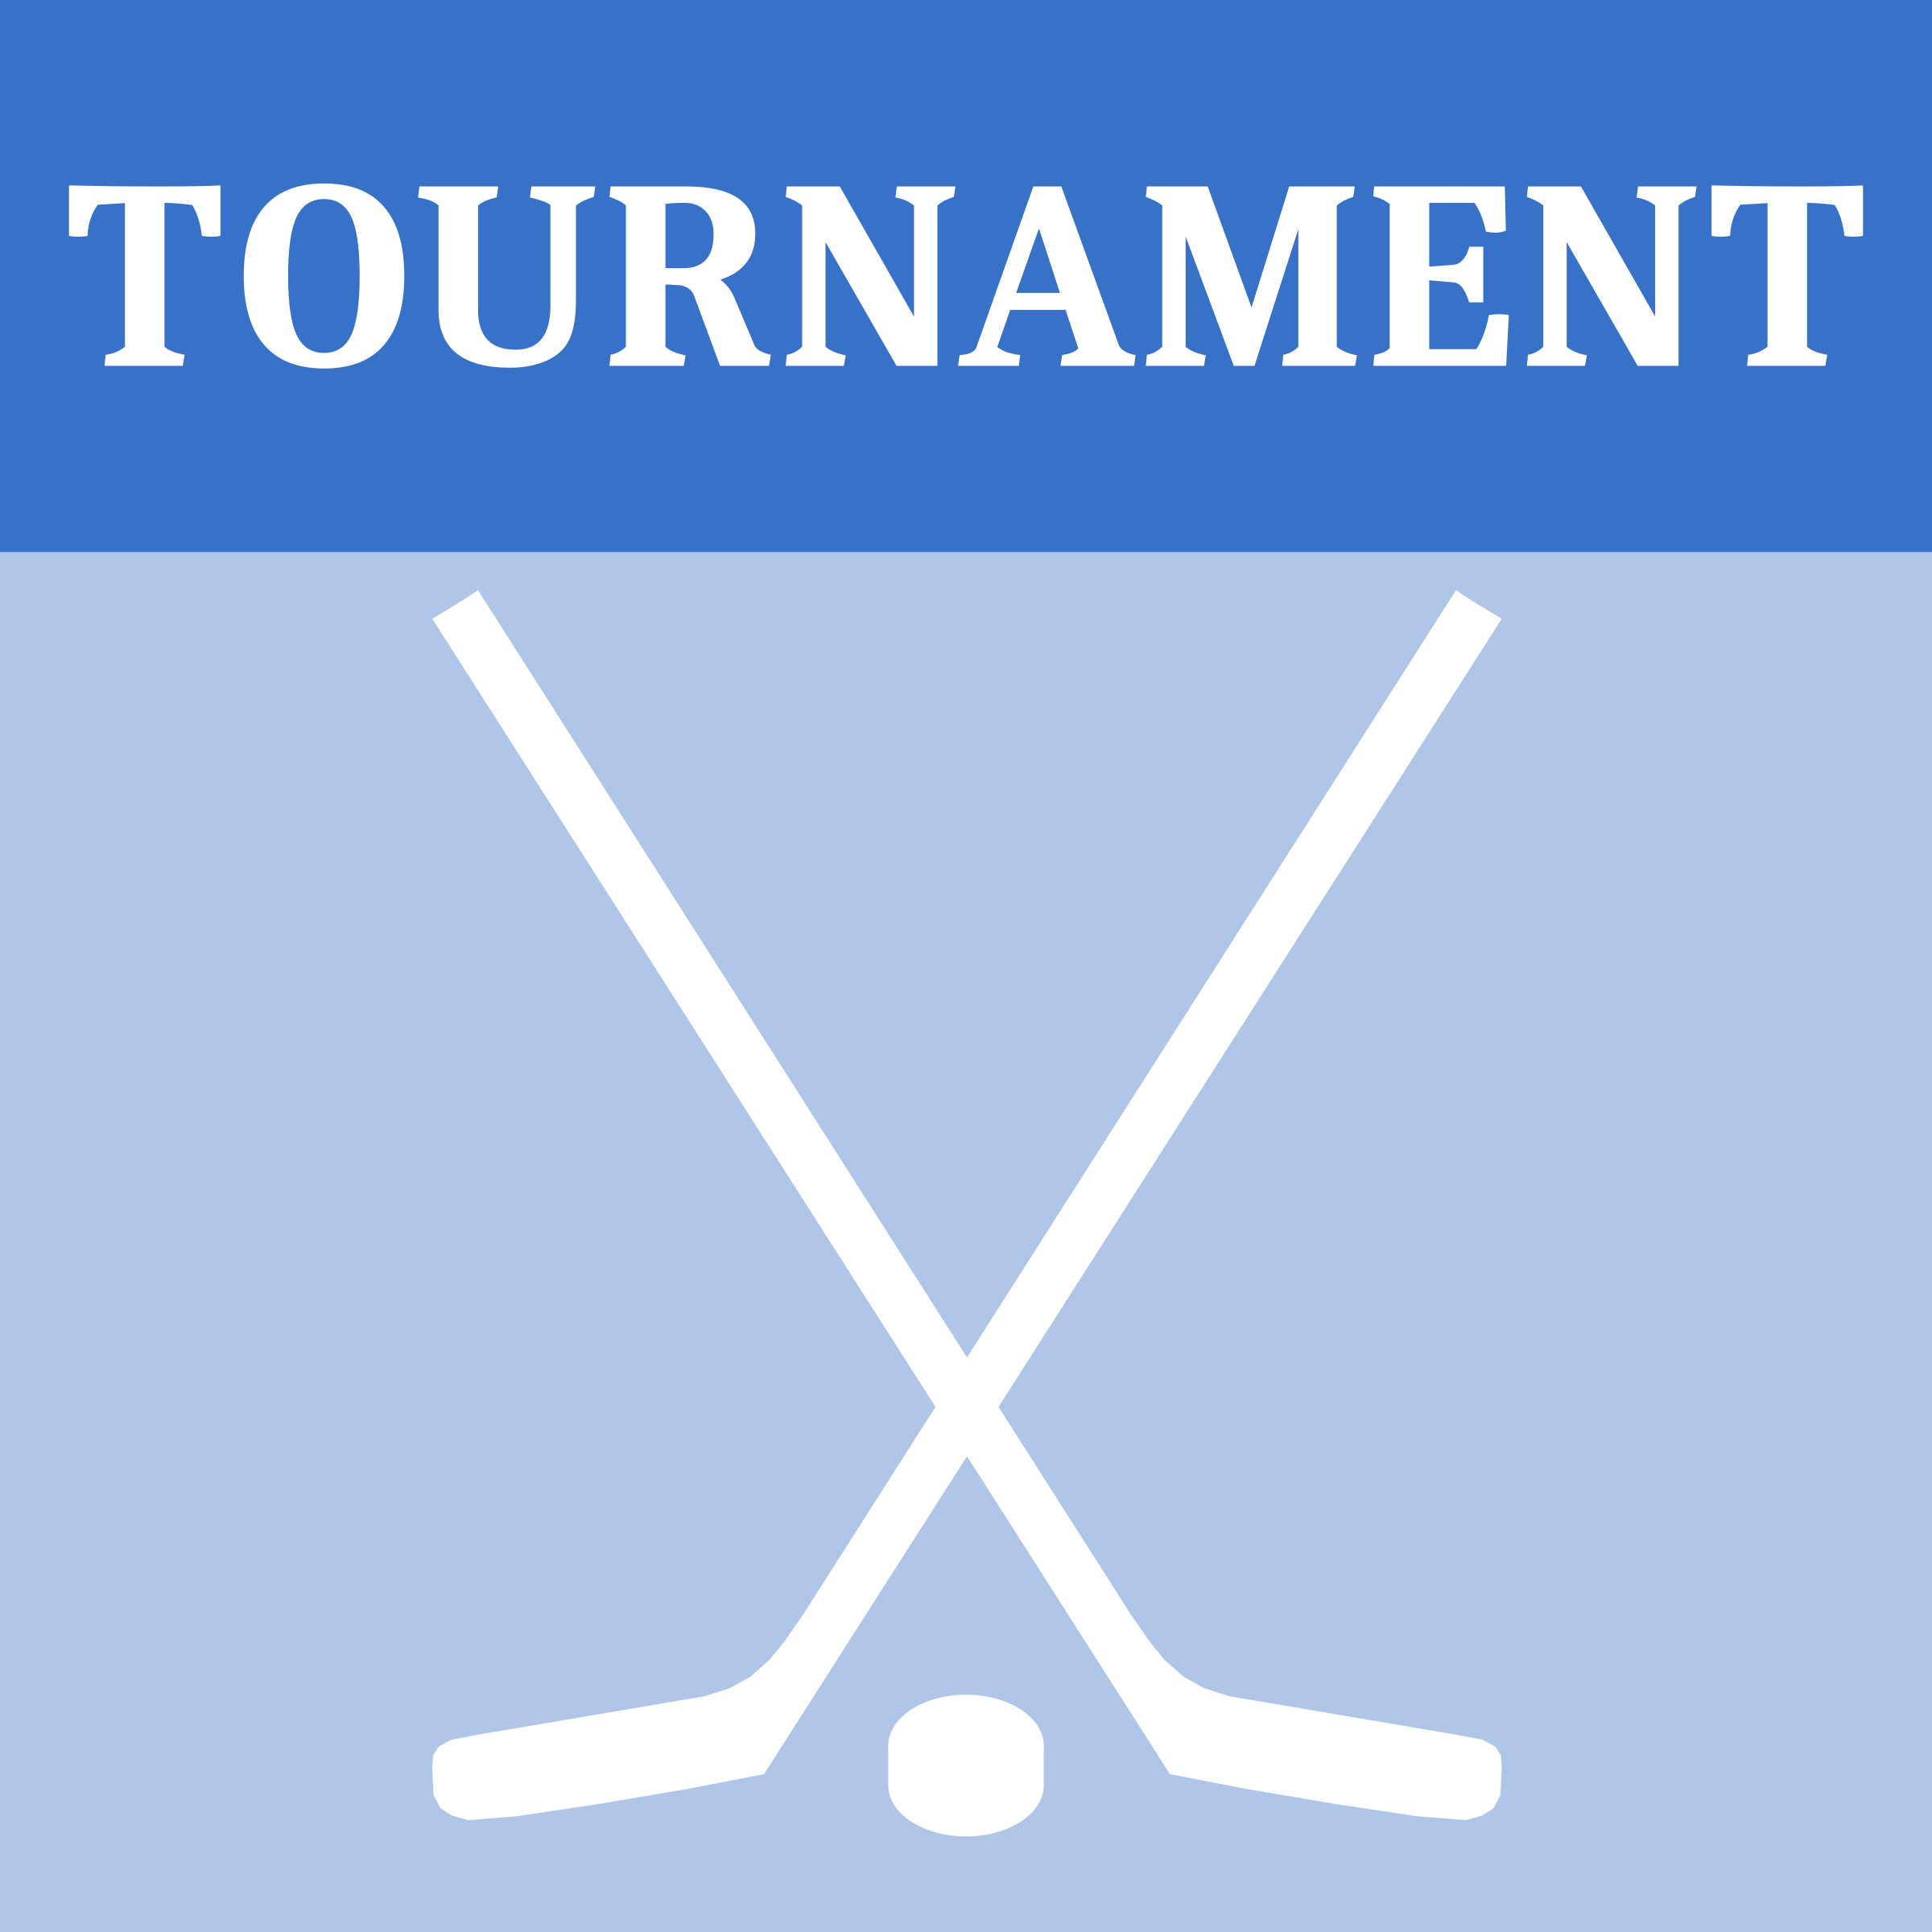 Tournament Clipart